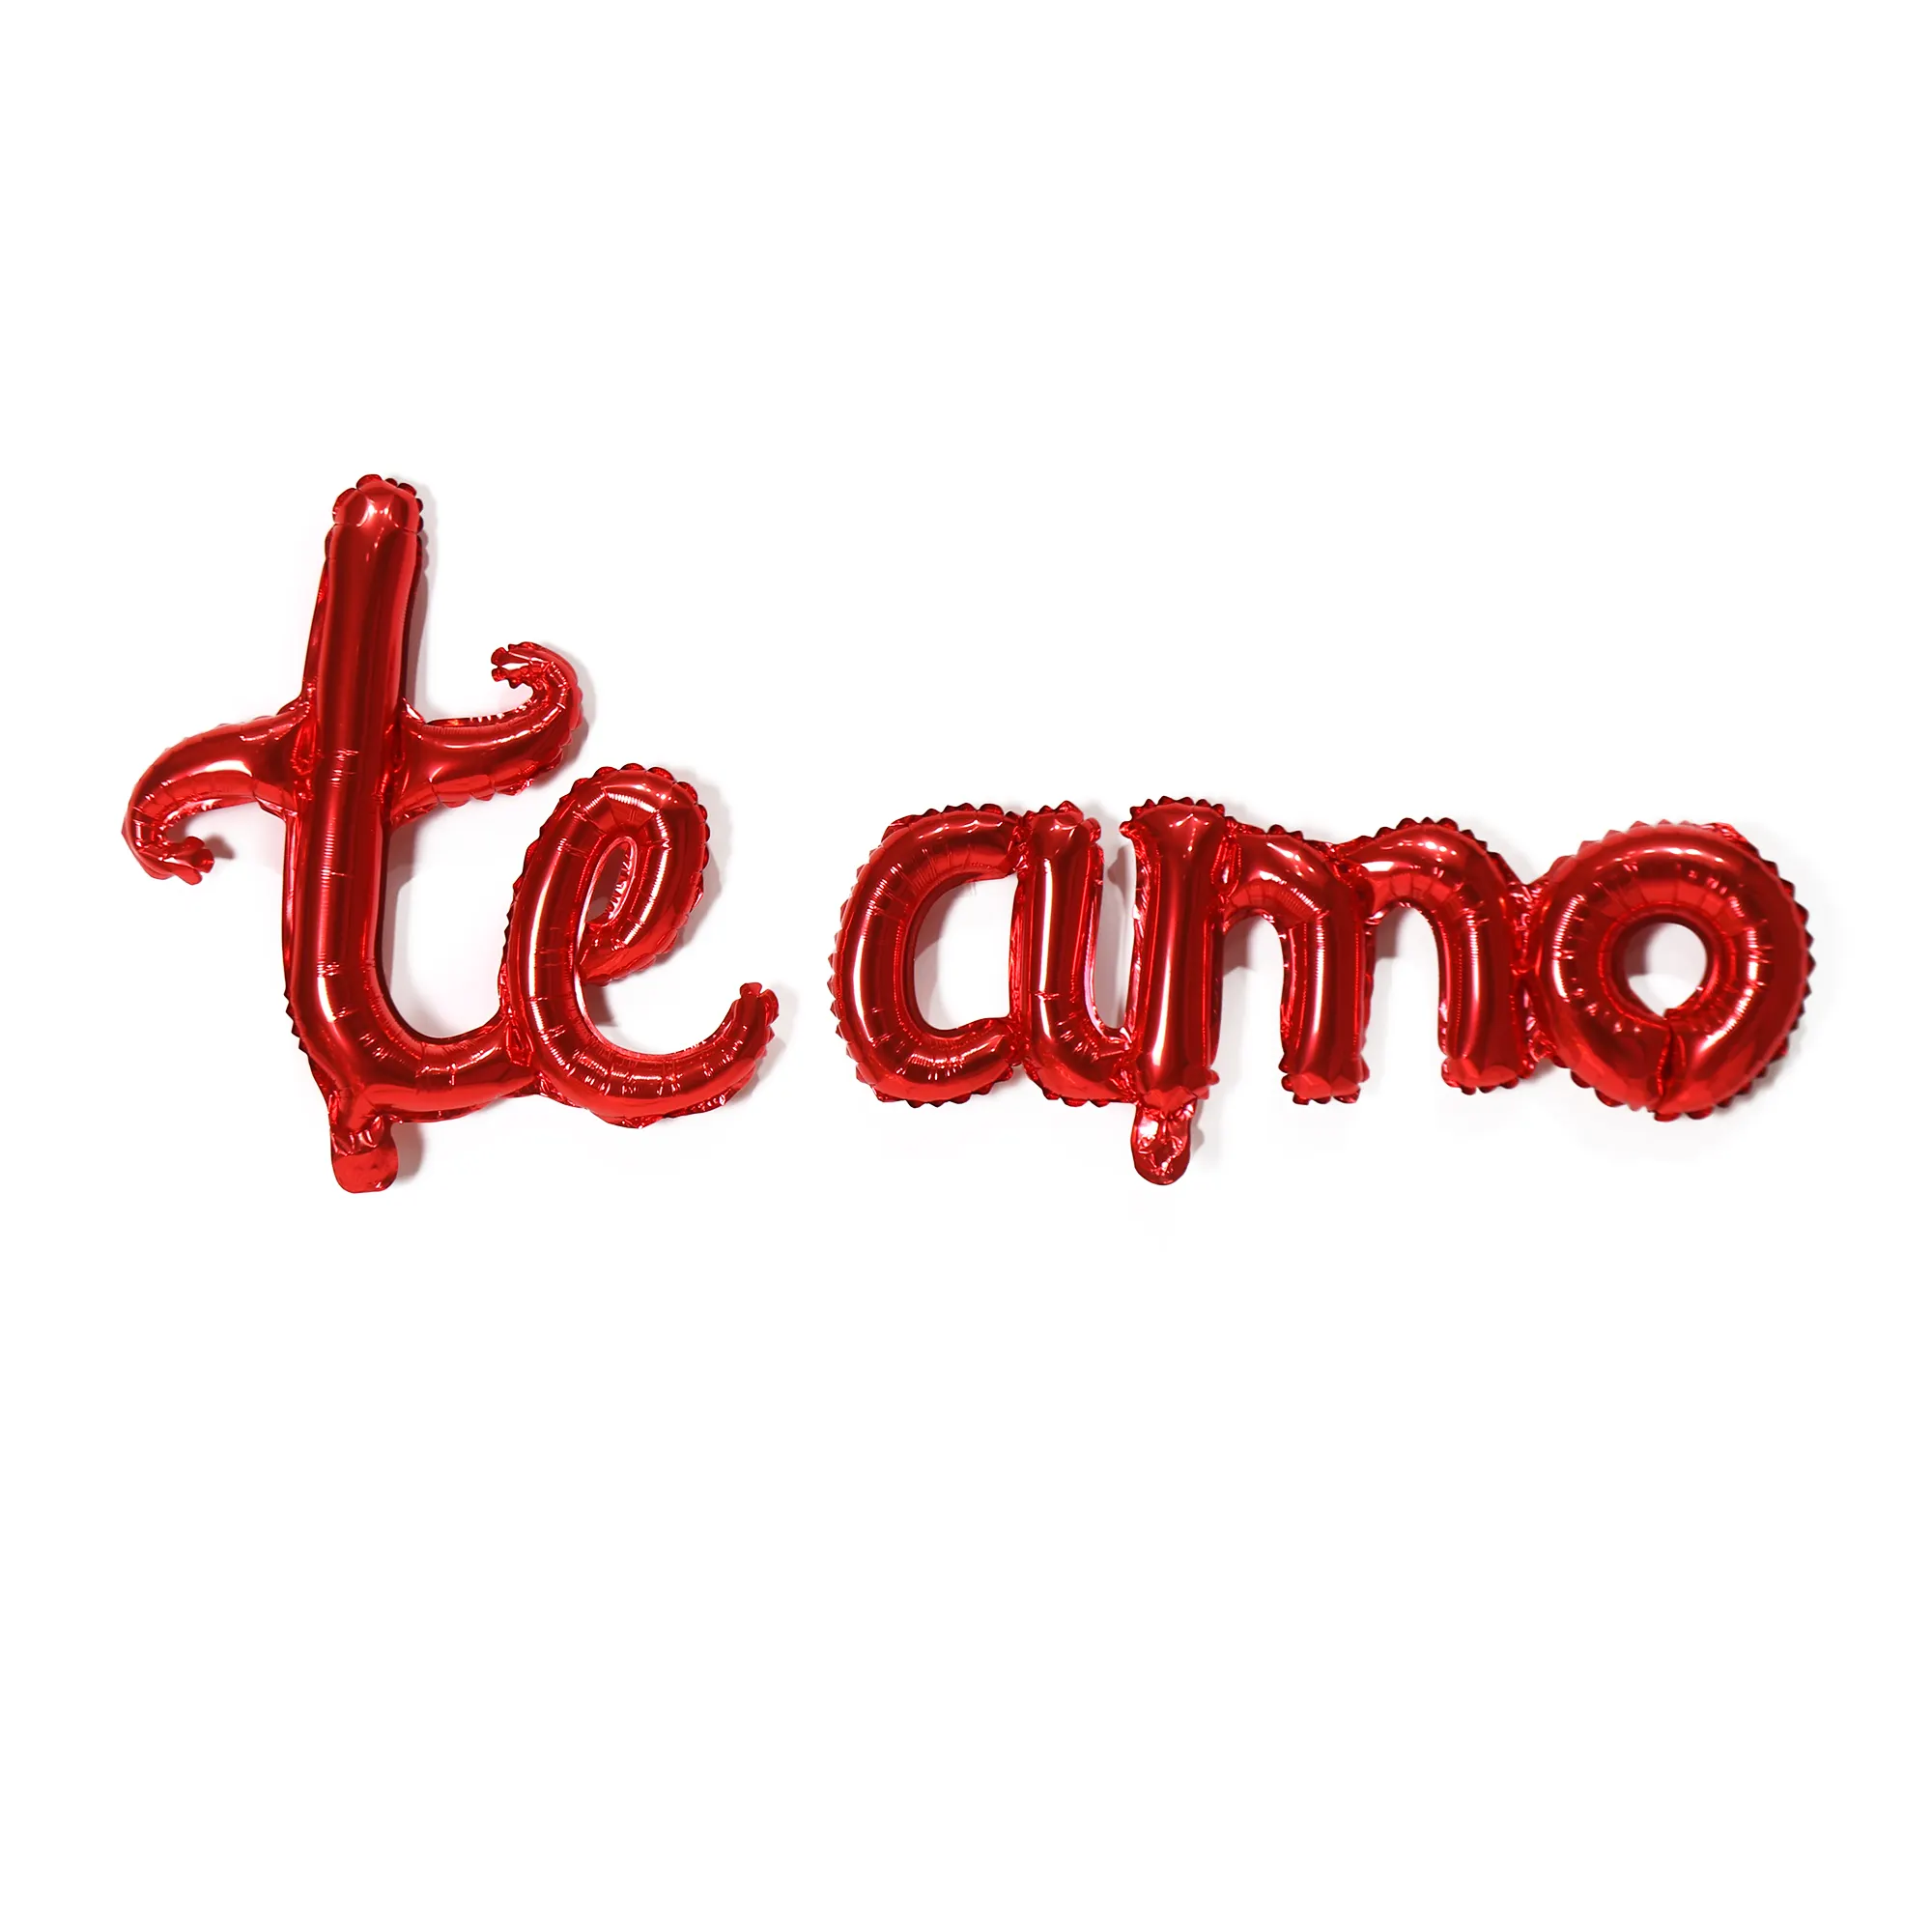 Good Quality Spanish Te Amo Letter Globos Valentines Day Wedding Anniversary Party Decor Ballon